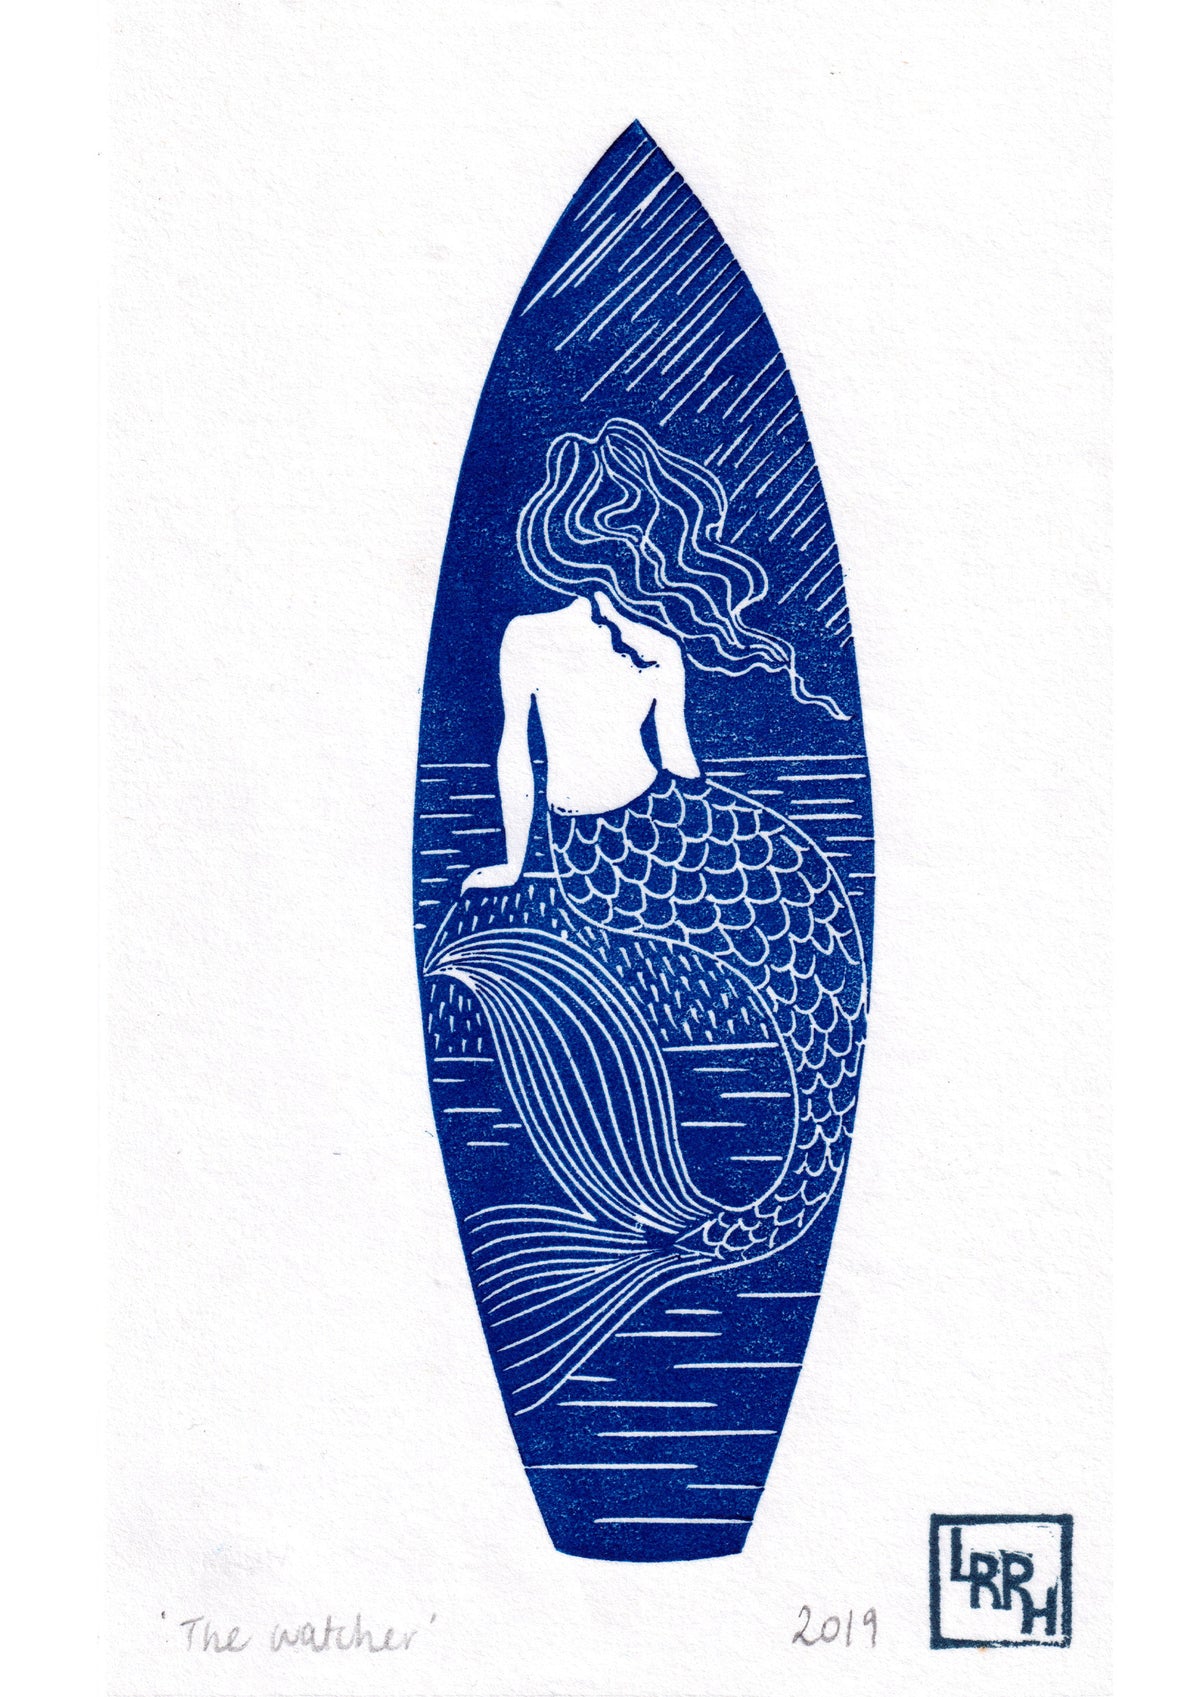 Boho mermaid surfboard design Linocut print, beach house wall art home decor - gift for a surfer or oceanlover